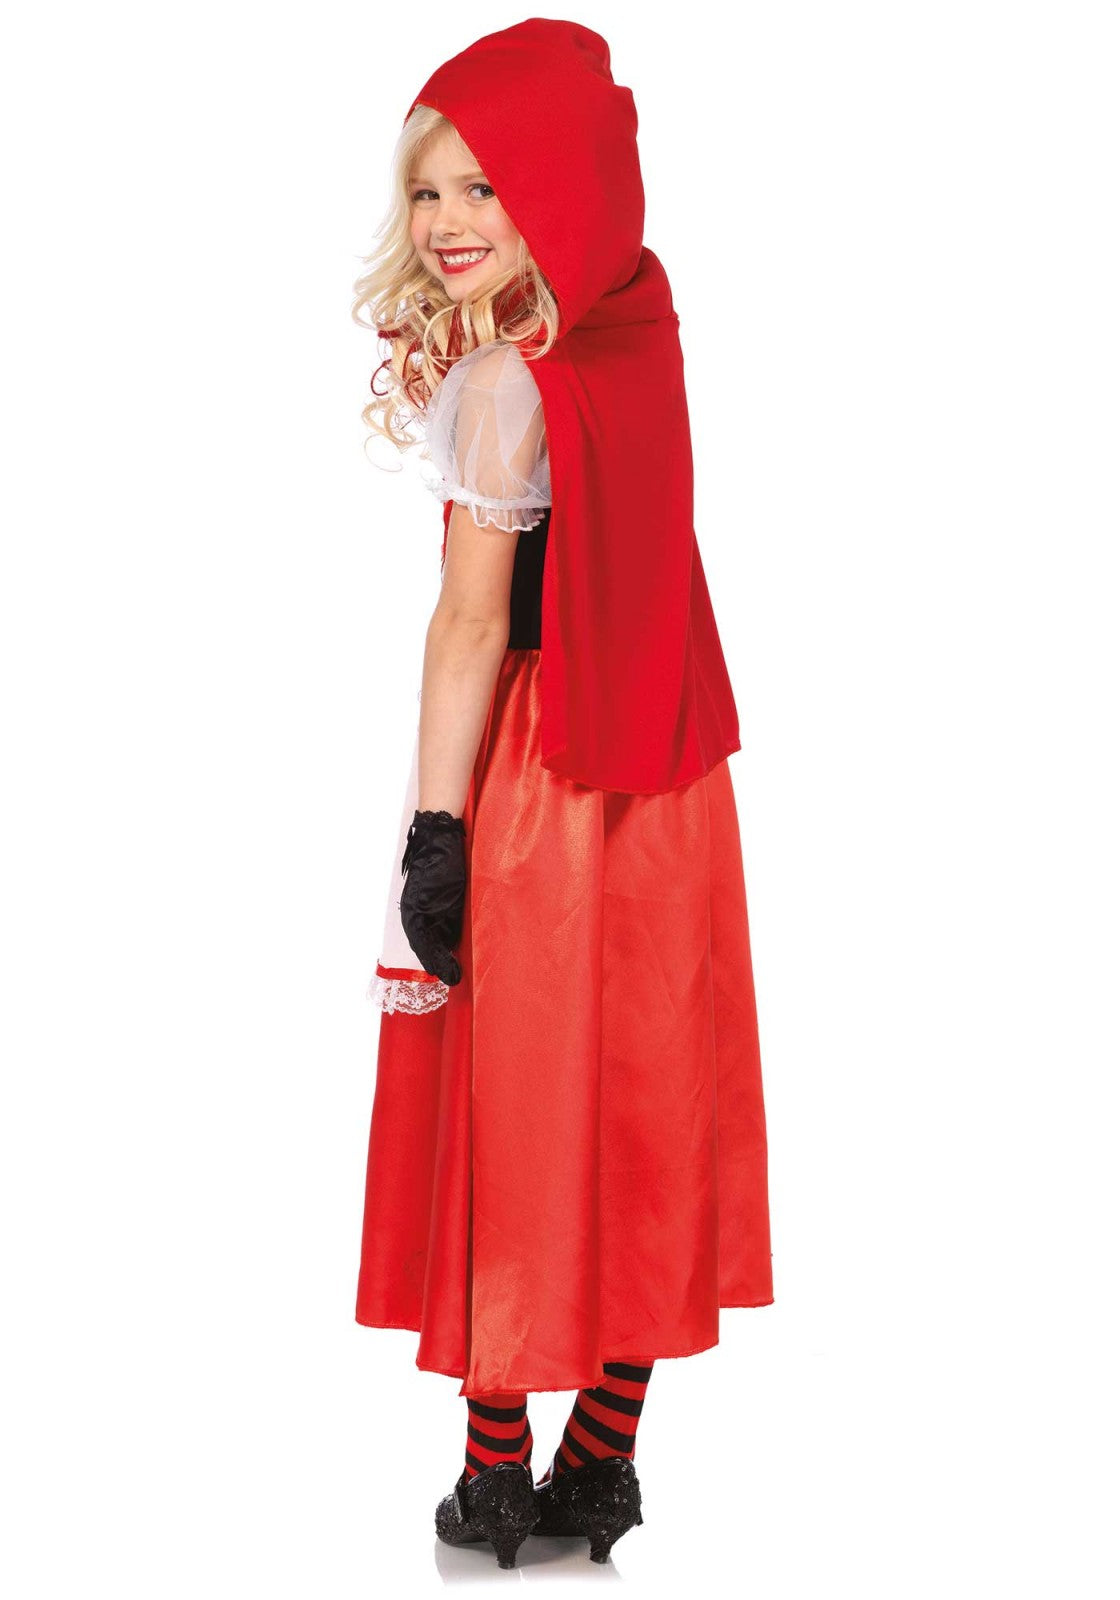 Little Red Riding Hood costume for children